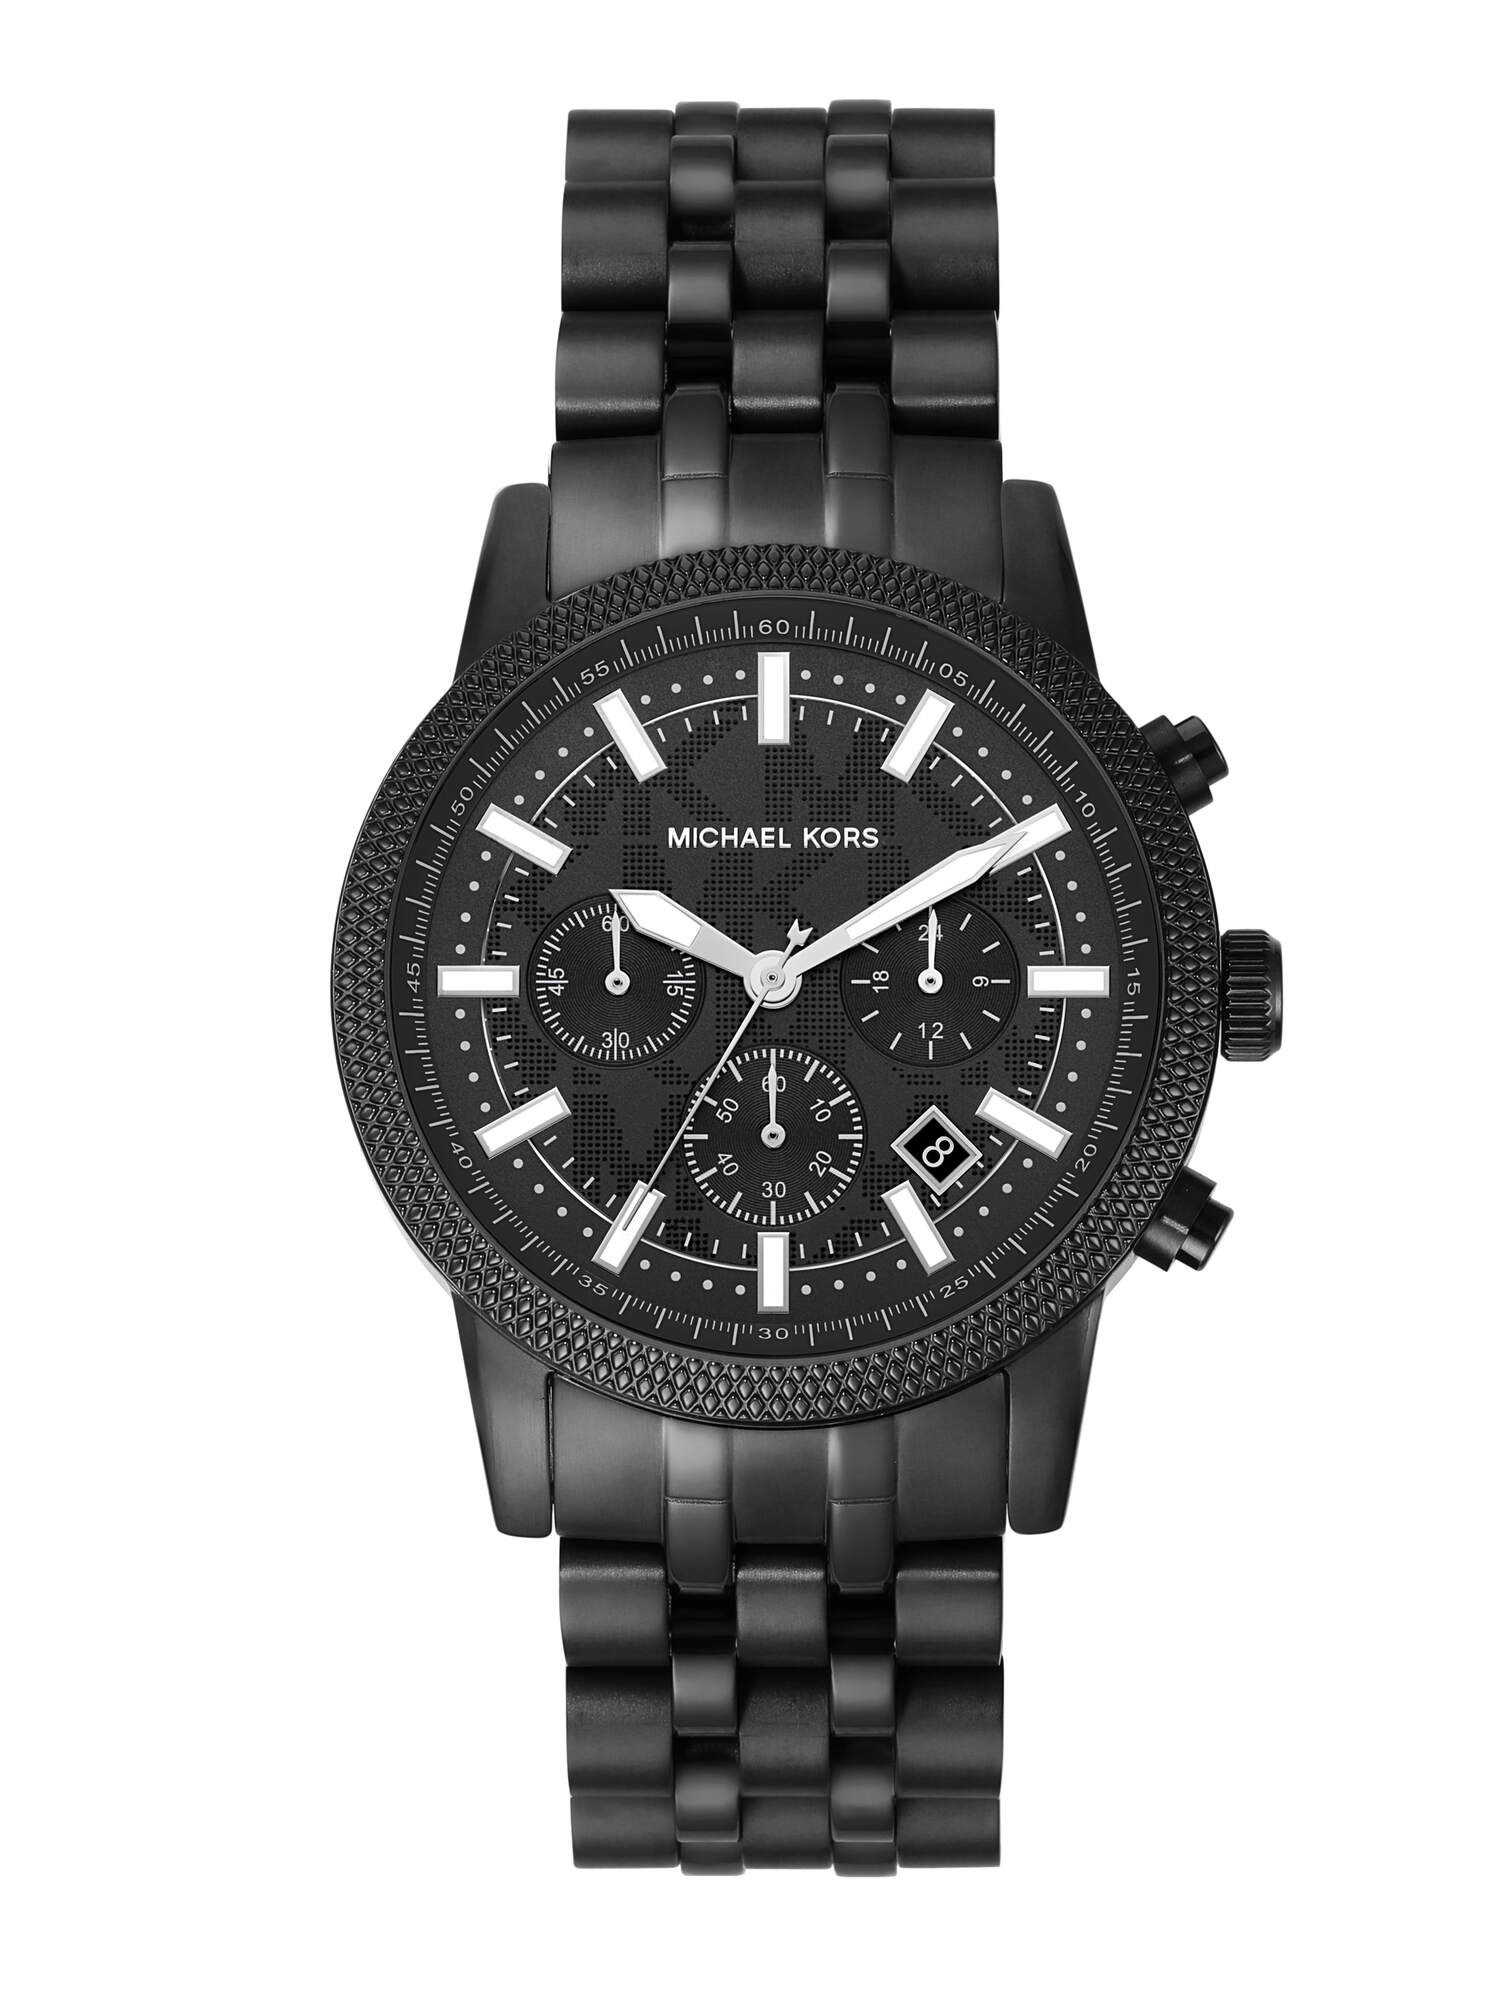 Michael Kors Hutton Black Watch MK9089 - Watch Station India